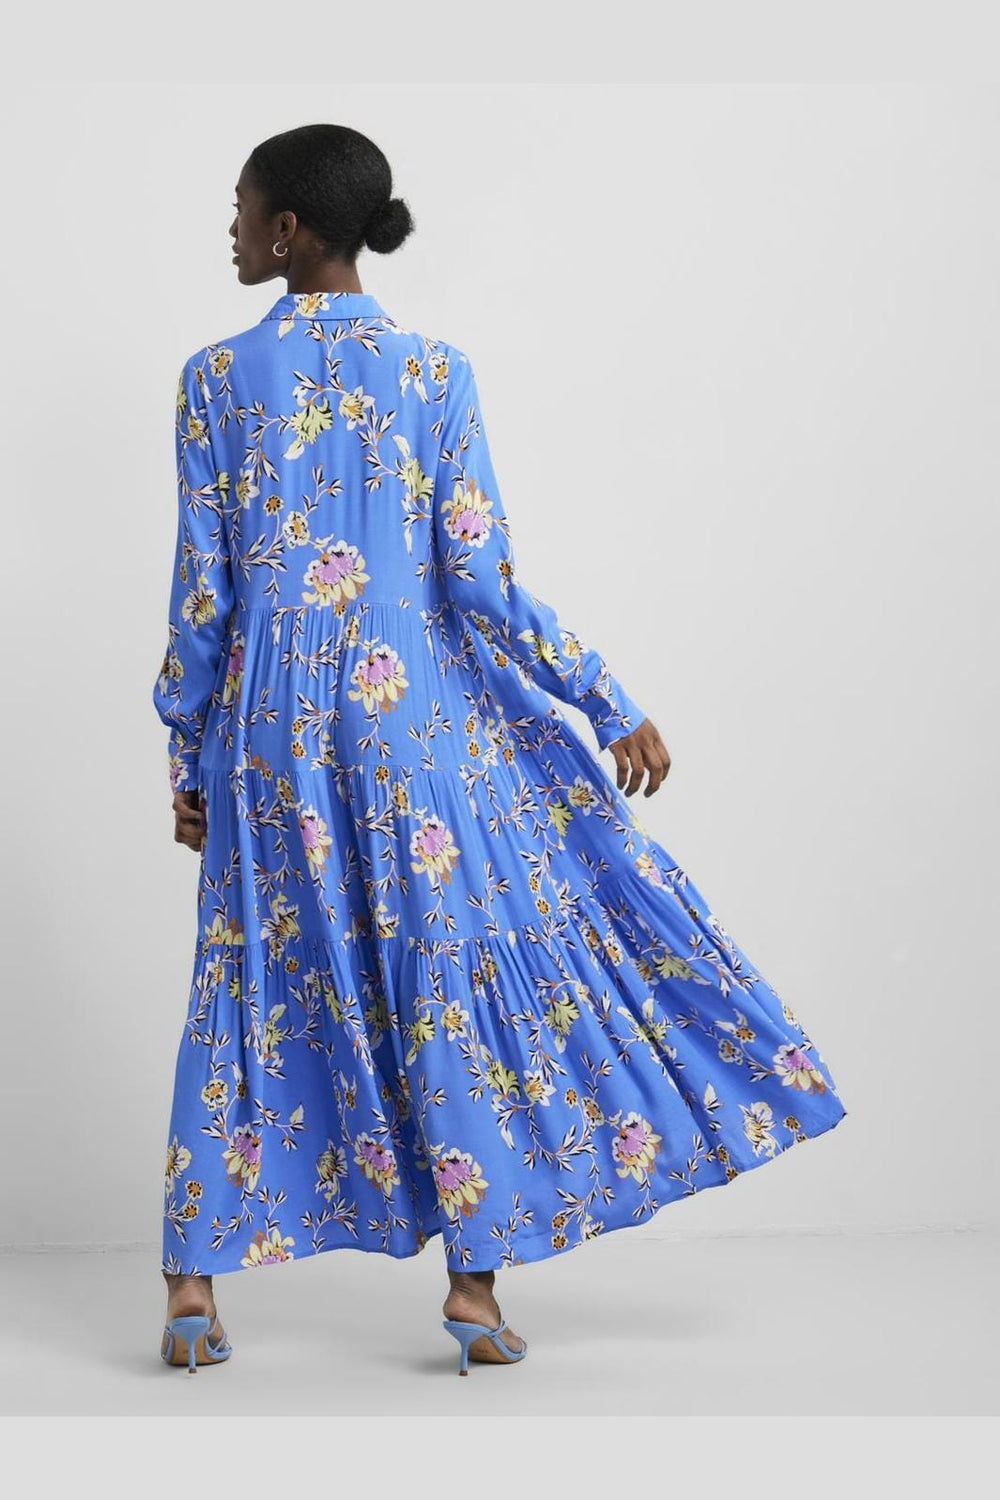 Y.A.S - Yasindigo Ls Long Dress - 4466141 Palace Blue Indigo Print